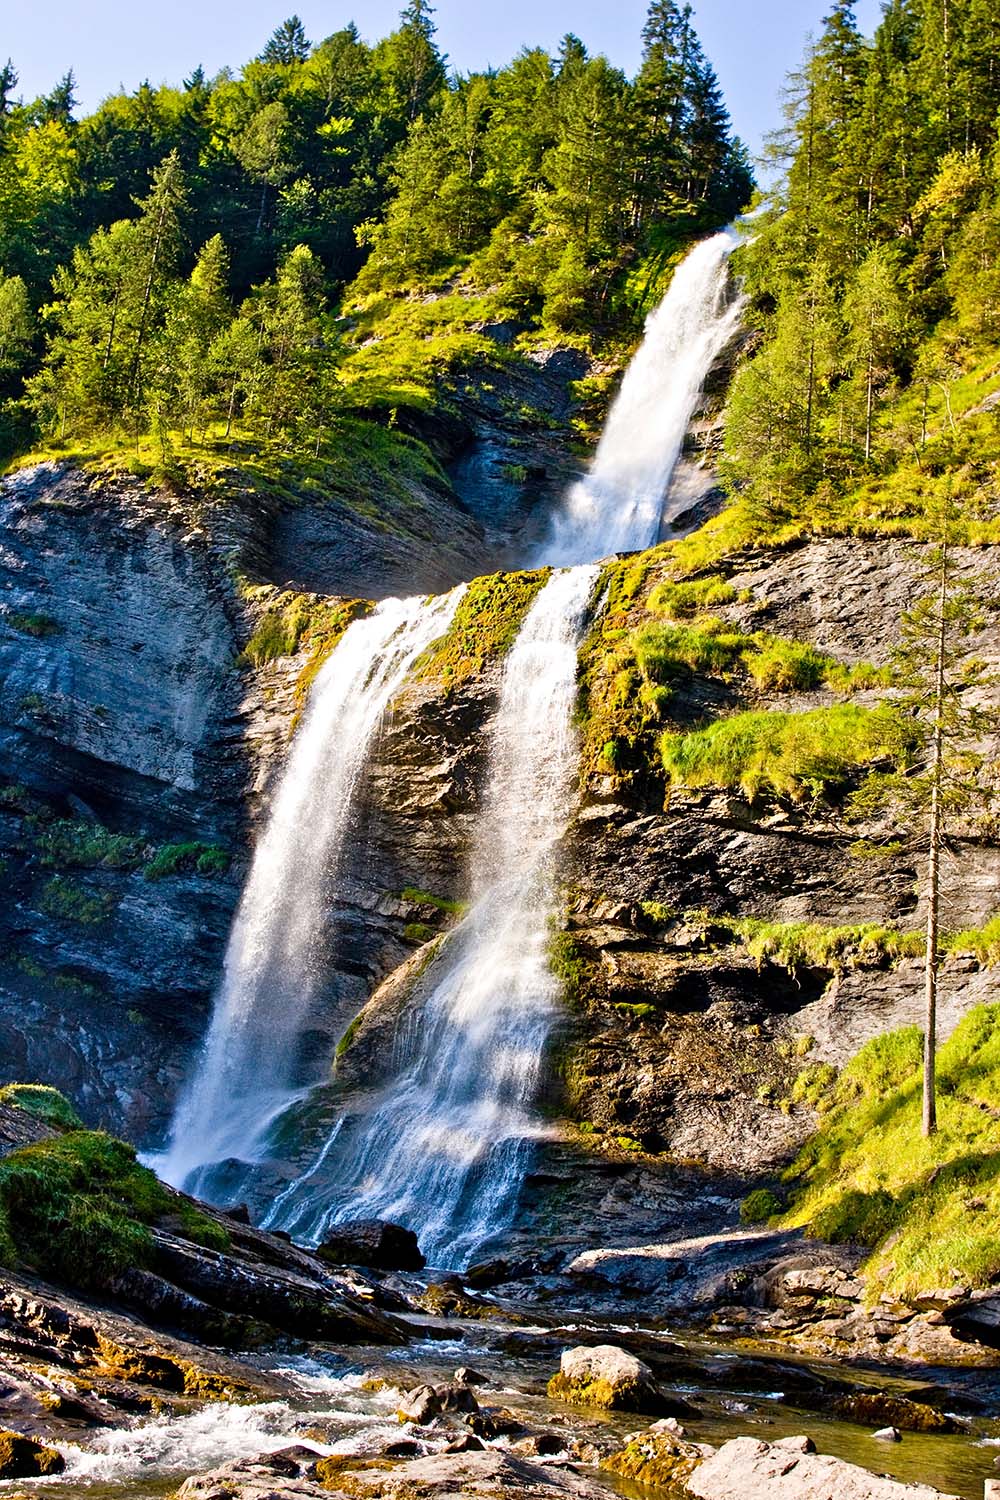 Cascade France : cascade du rouget en haute savoie